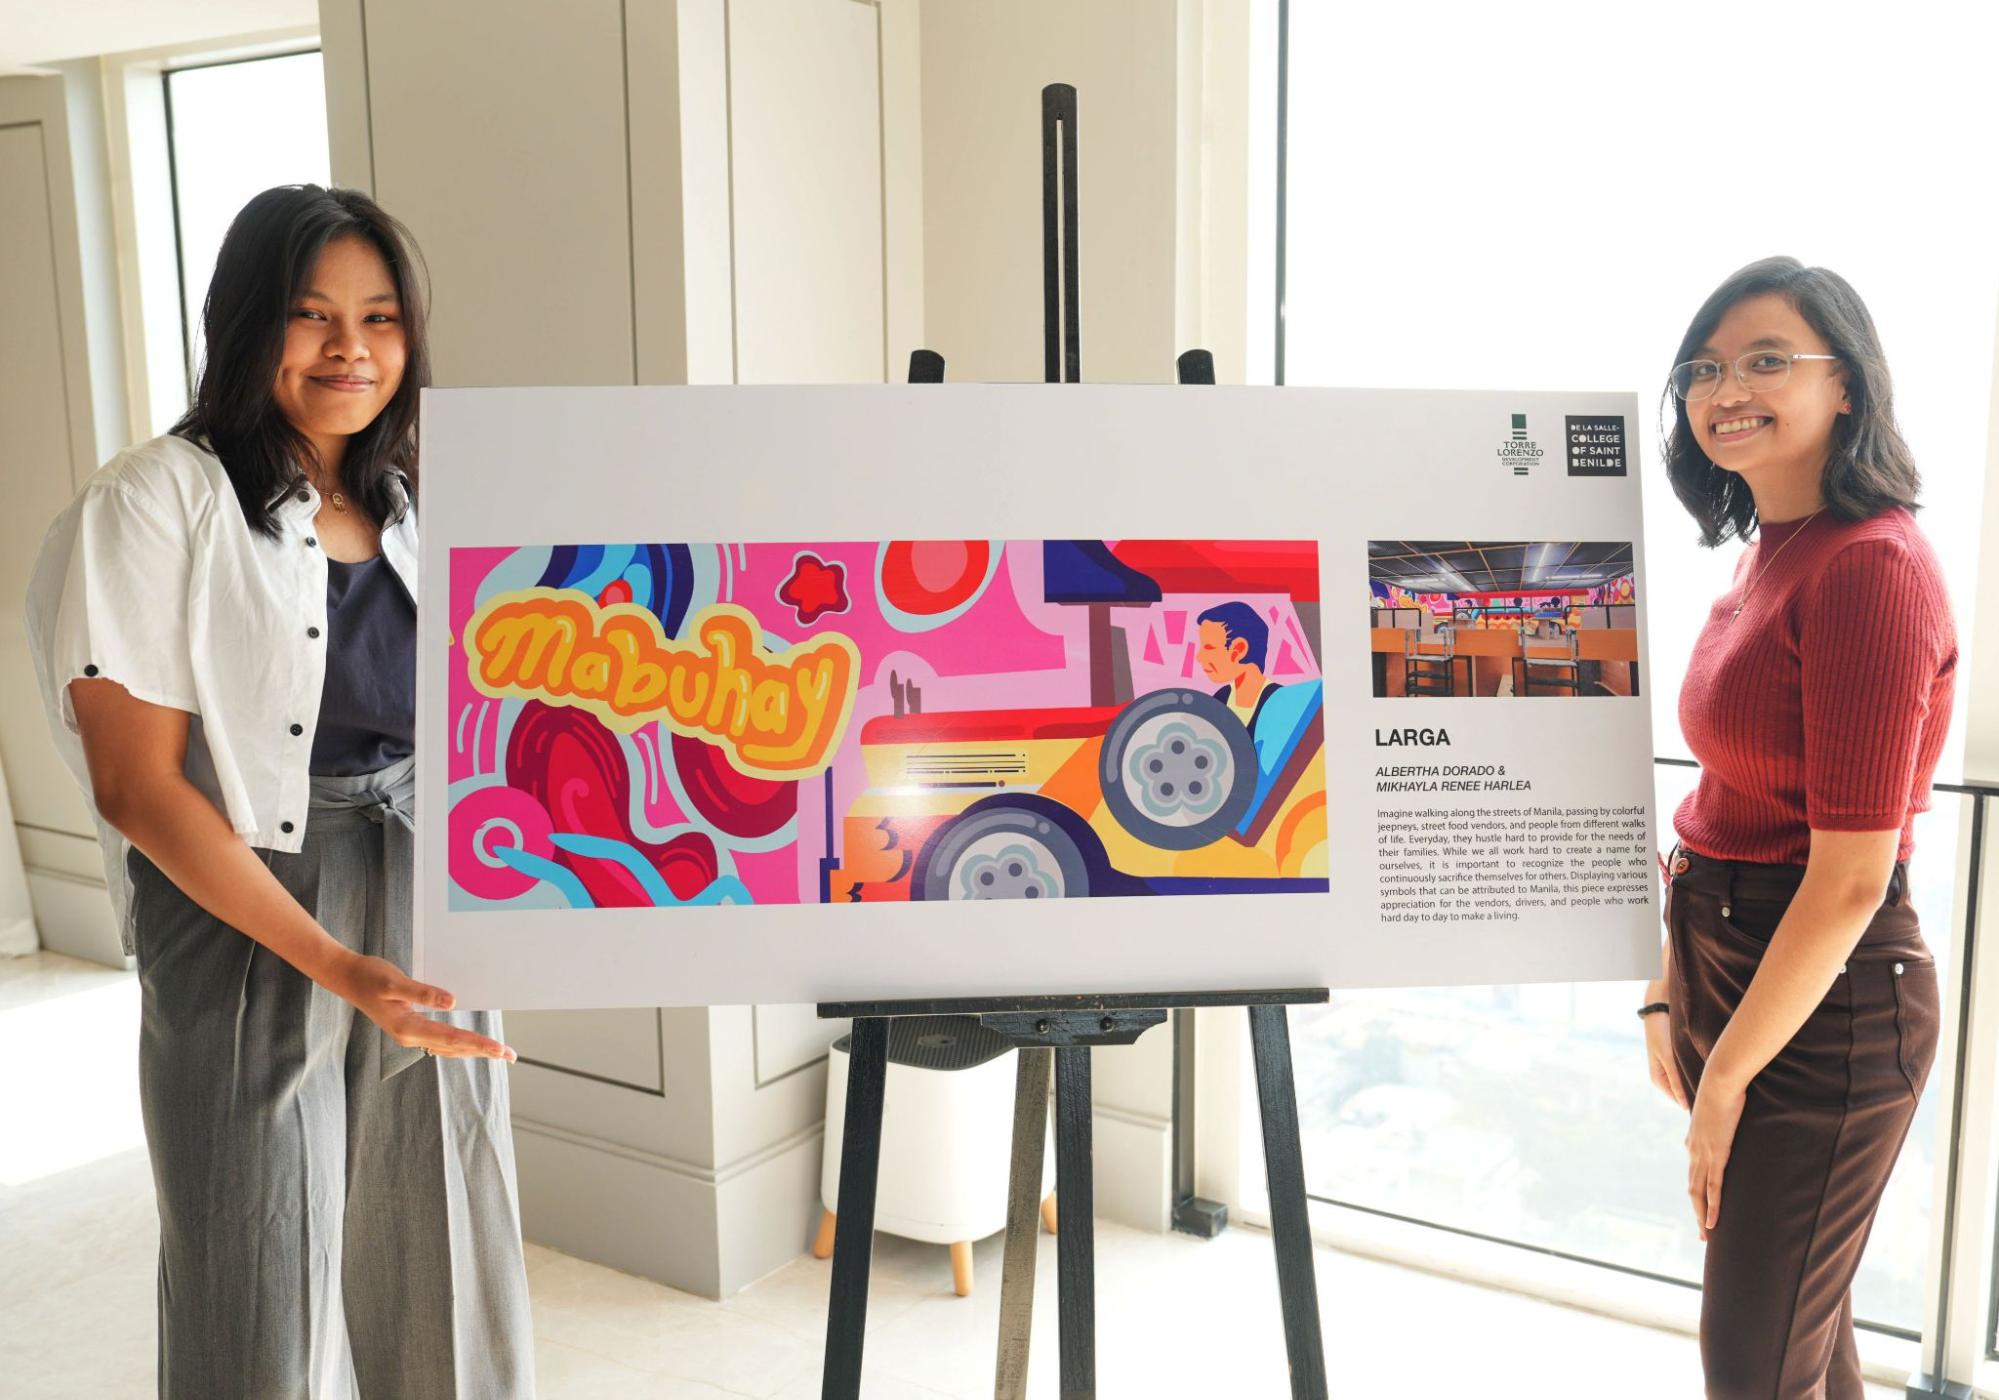 Albertha Dorado and Mikhayla Renee Harlea the artist's behind LARGA digital mural artwork